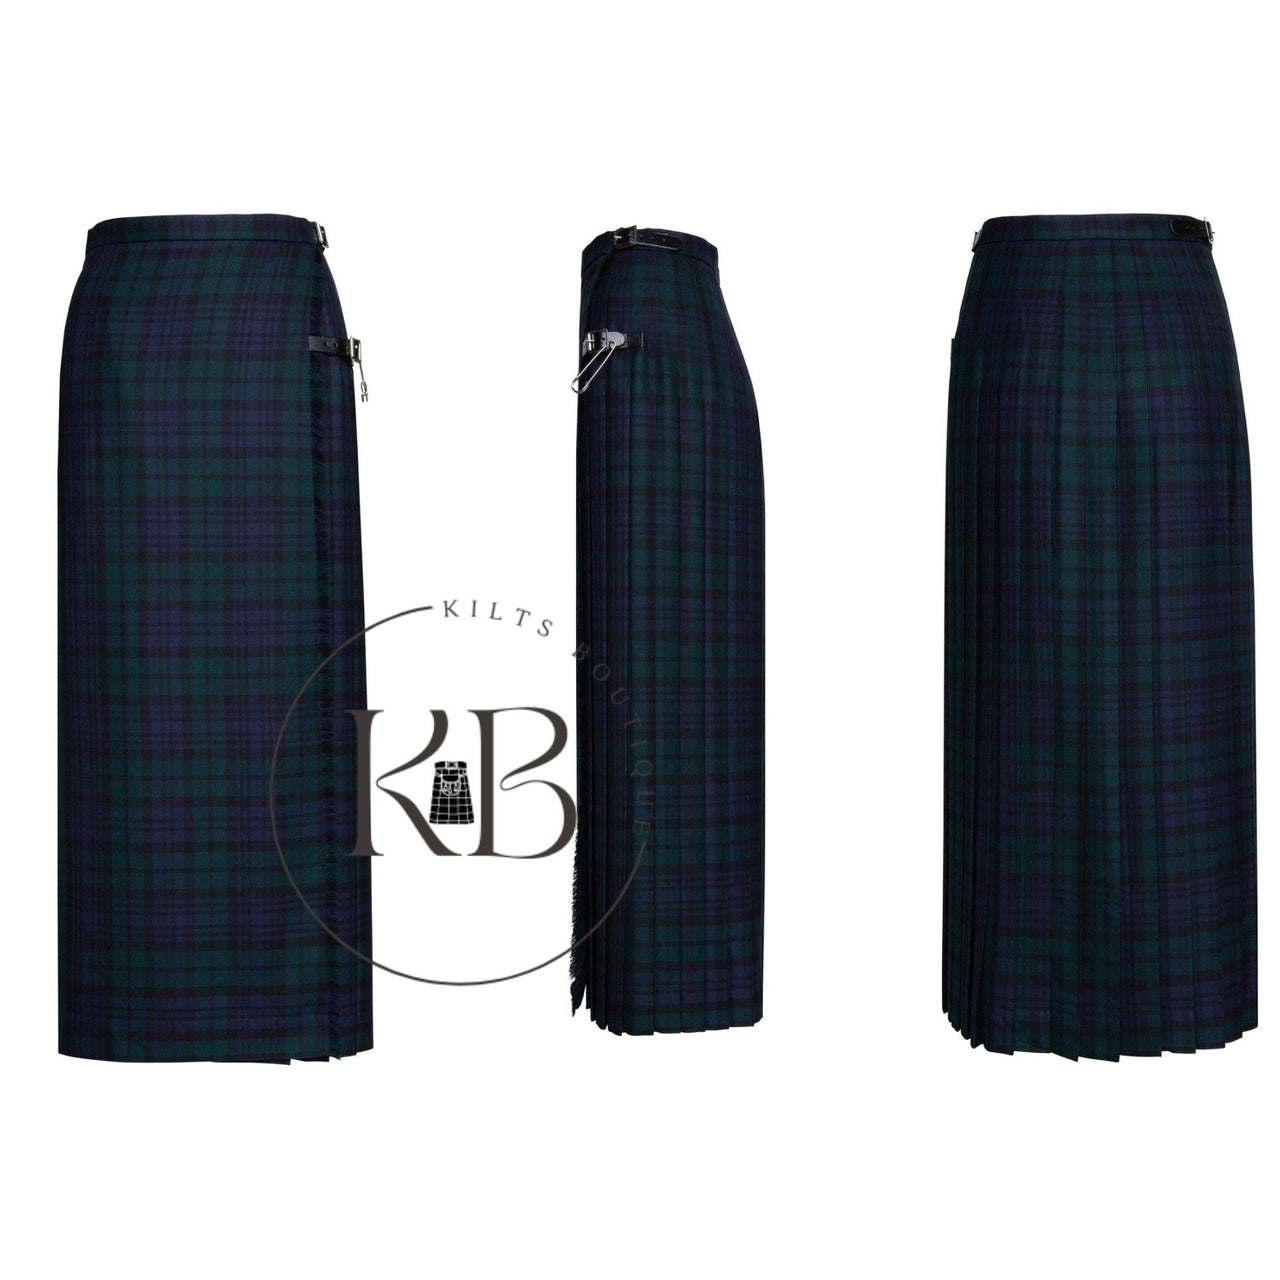 Ladies Tartan Kilted Full Length Kilted Hostess Tartan Skirt Length 38 inches